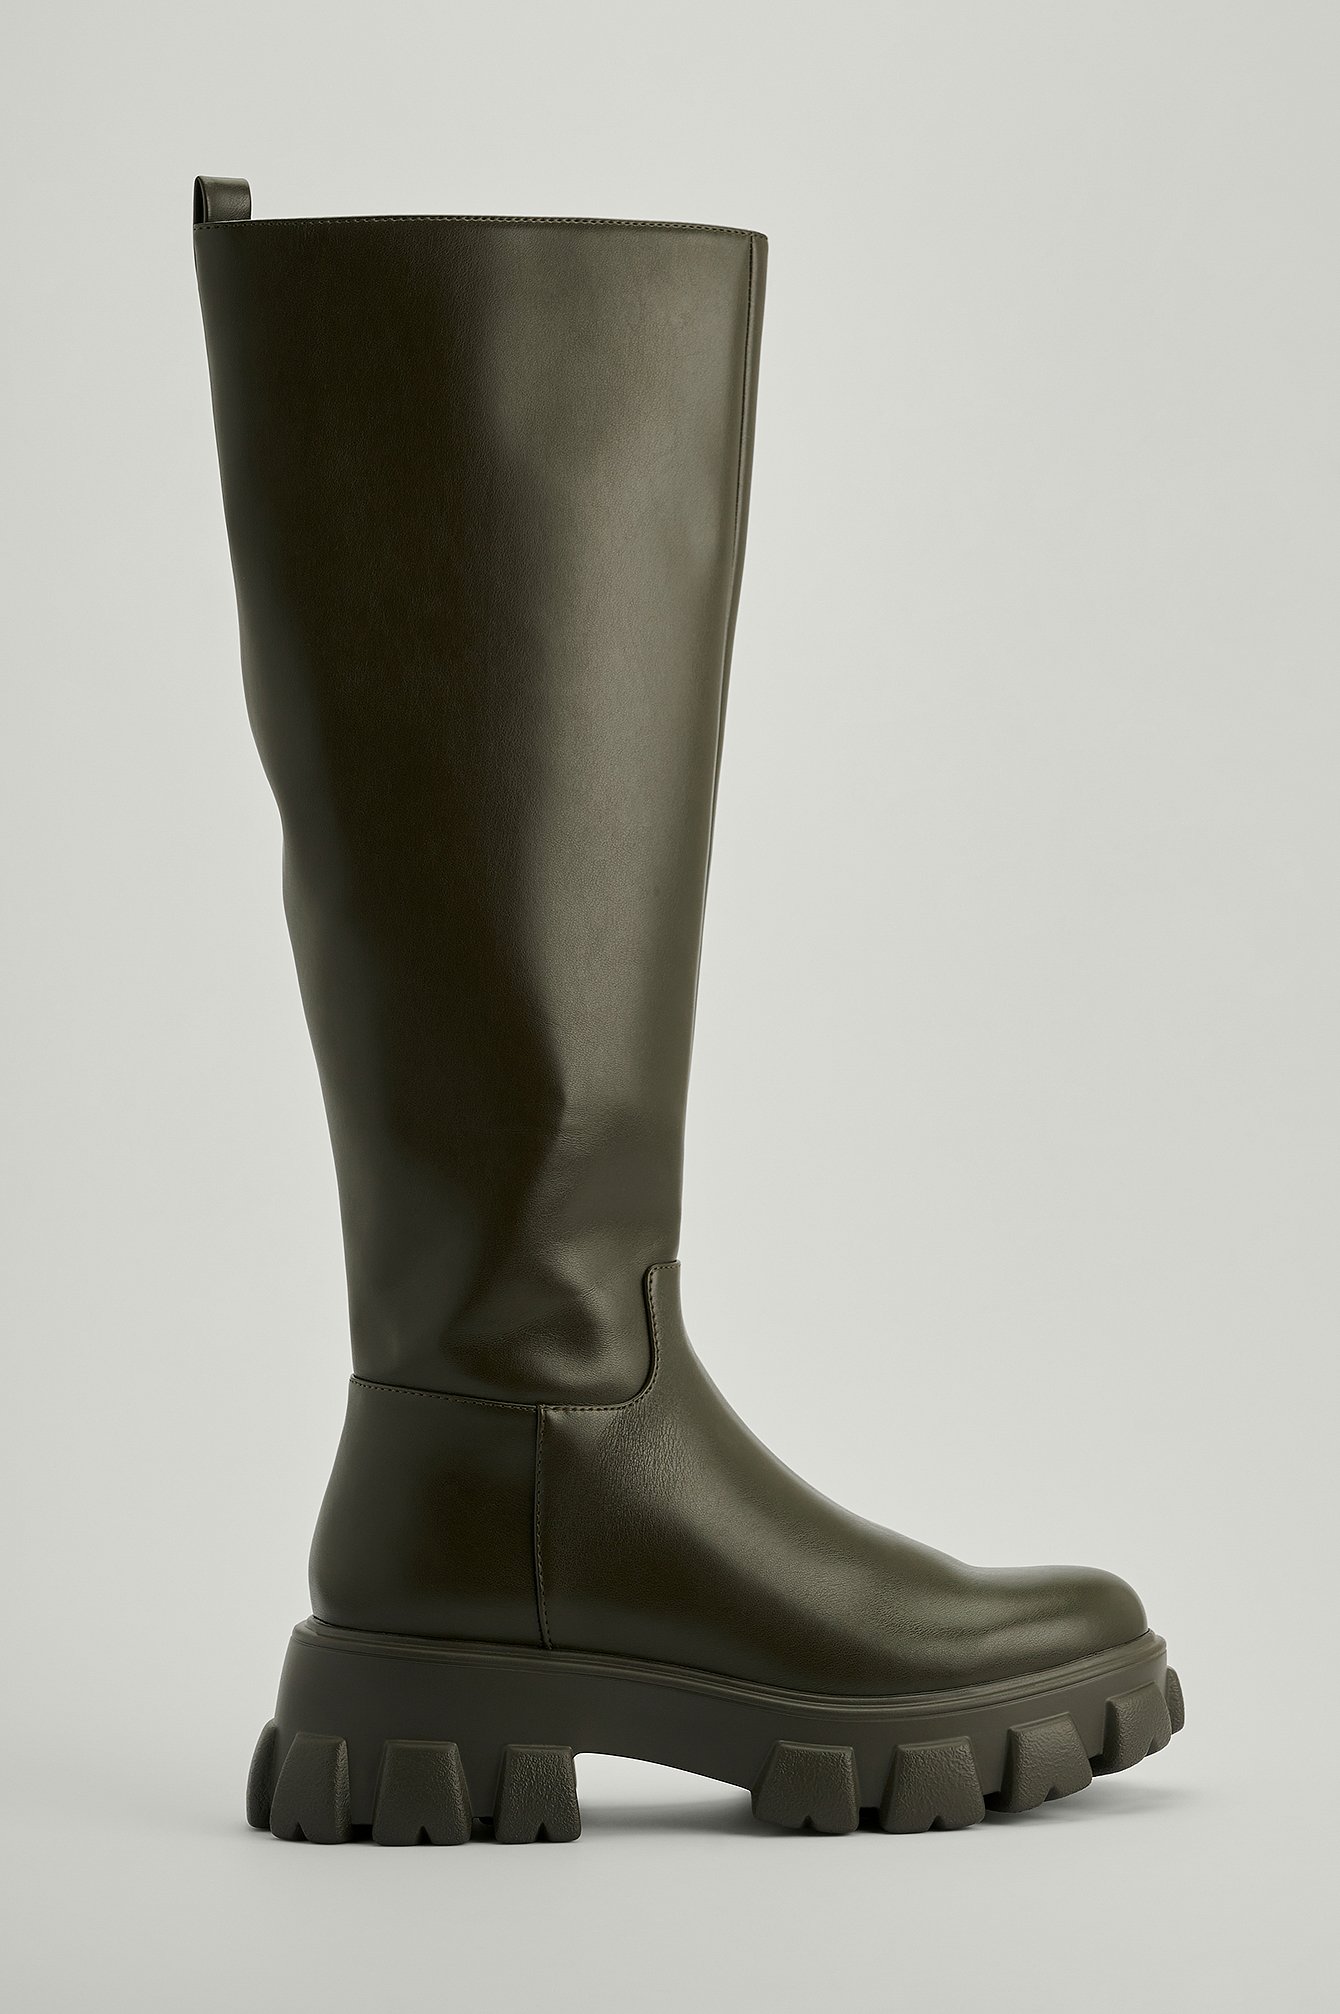 Khaki Resirkulerte boots med profilsåle og hæl